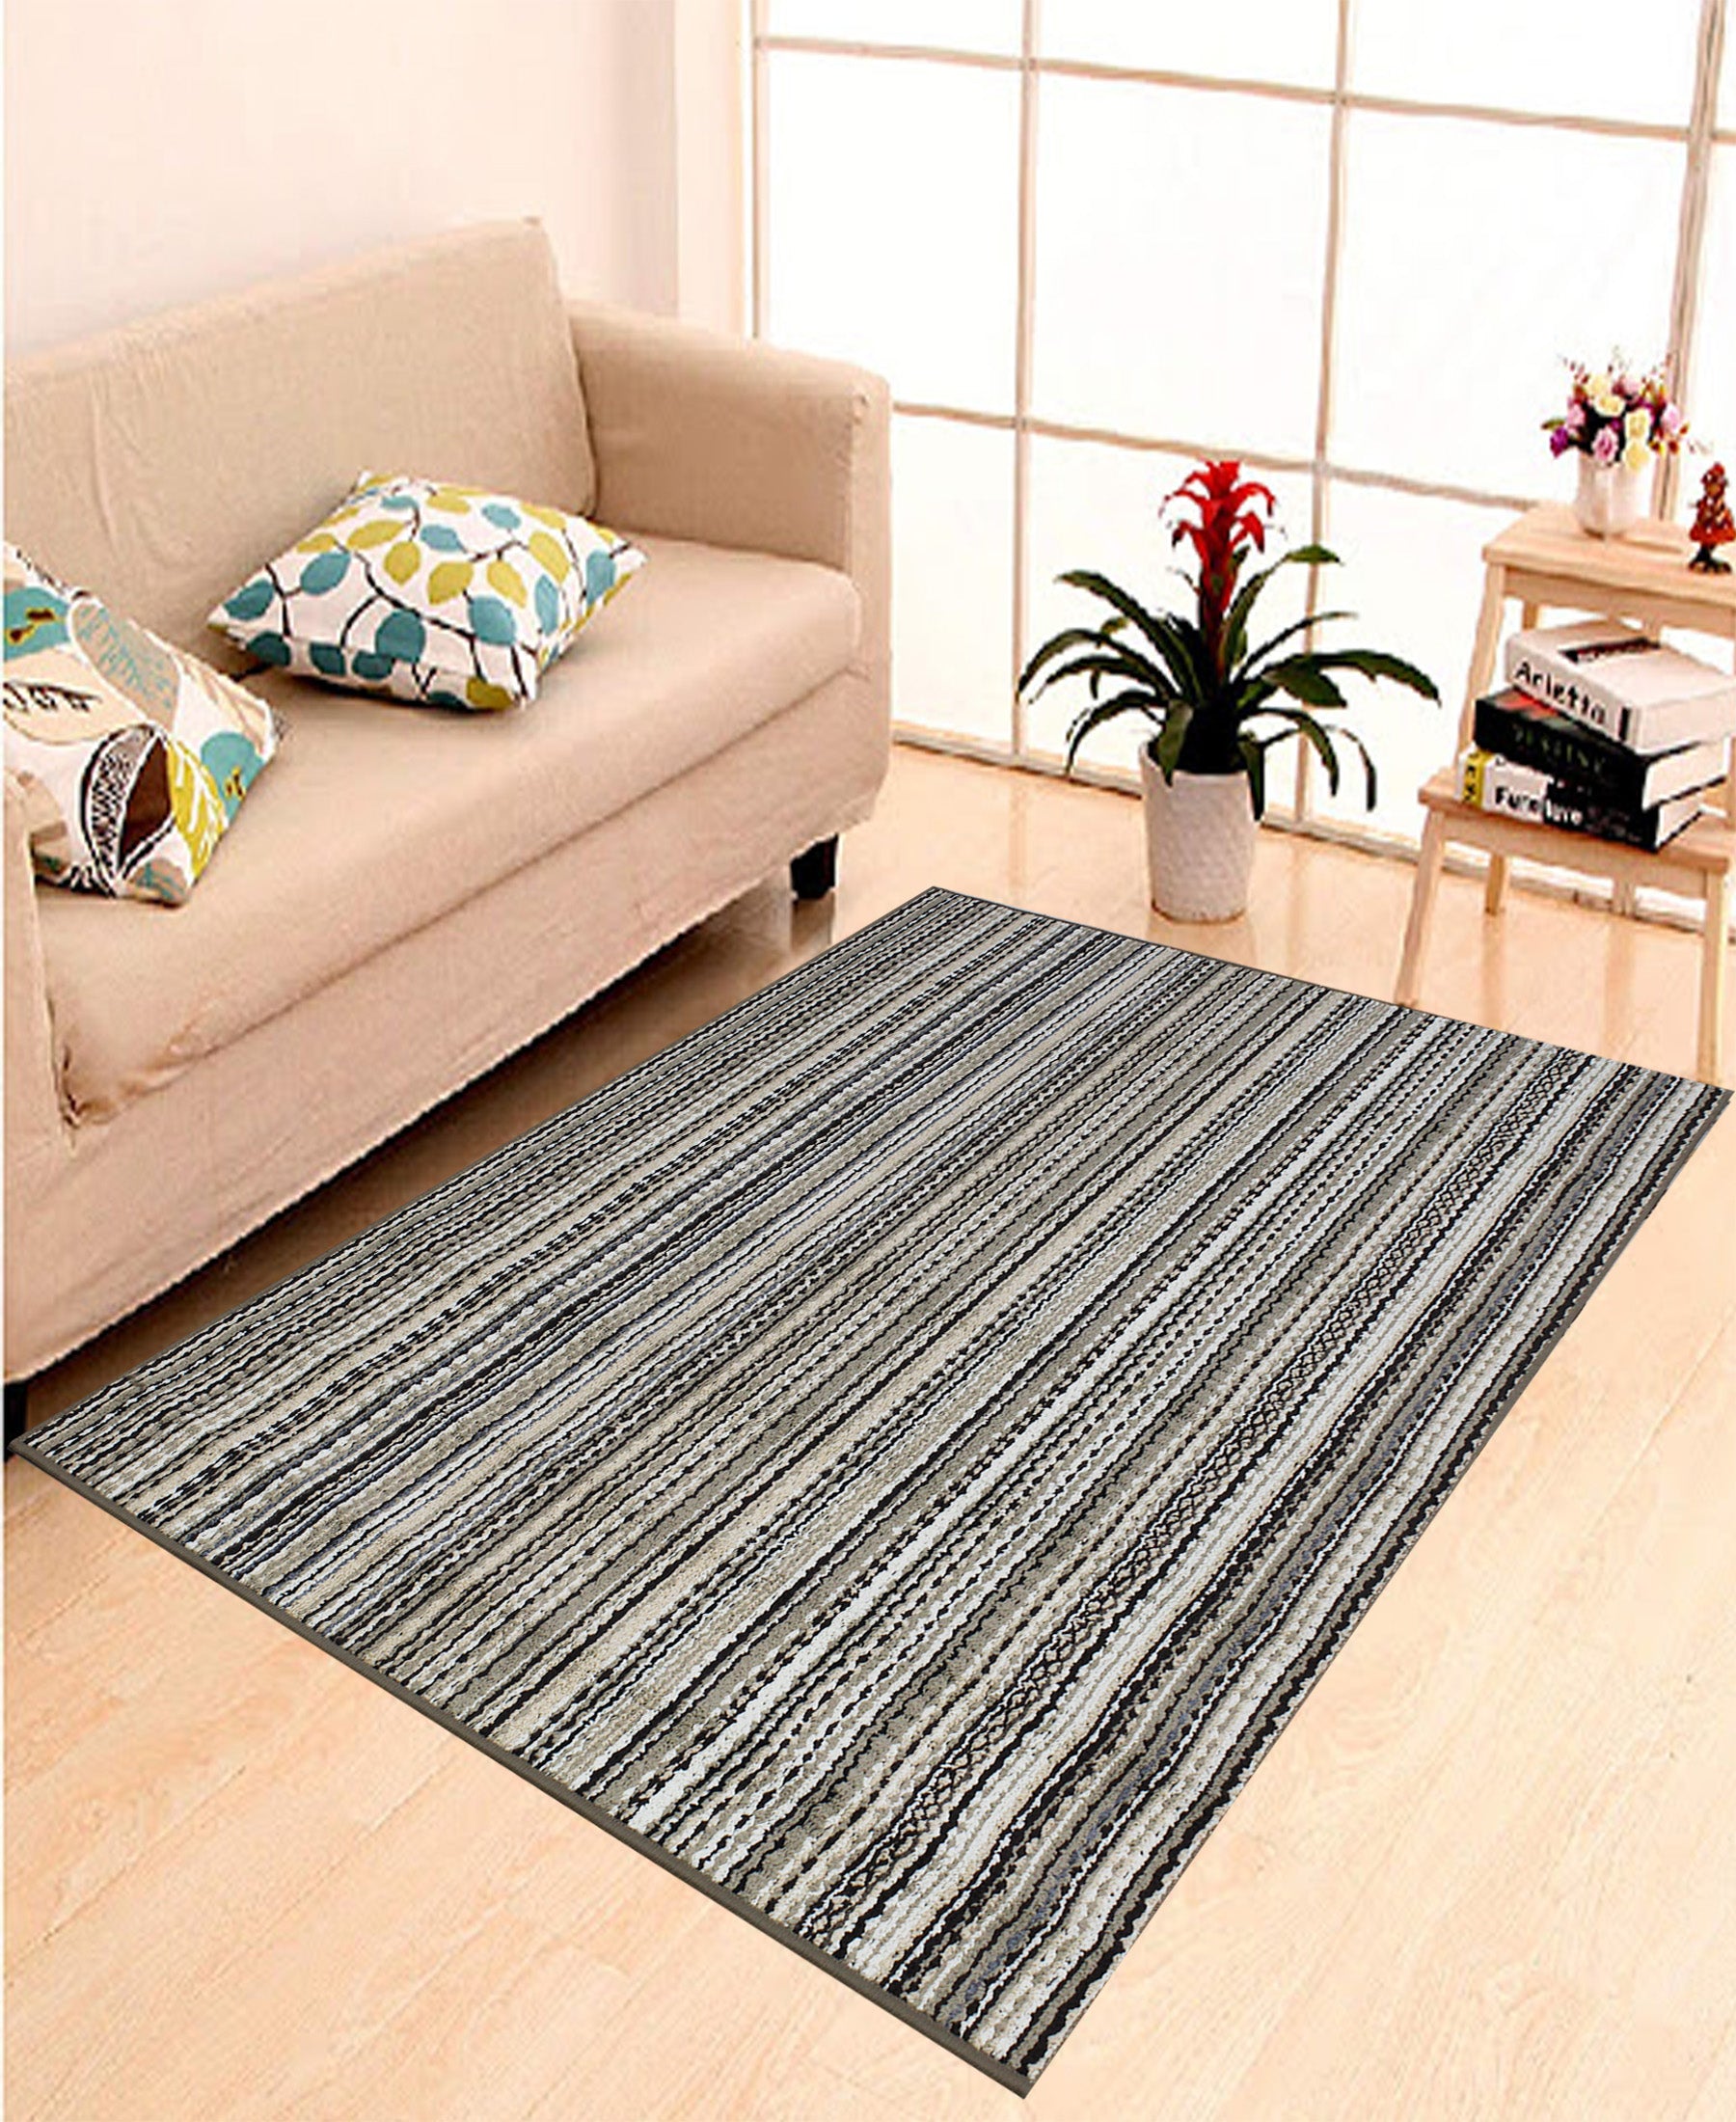 Egyptian Poly Print Carpet 1220mm x 1830mm - Brown Stripes